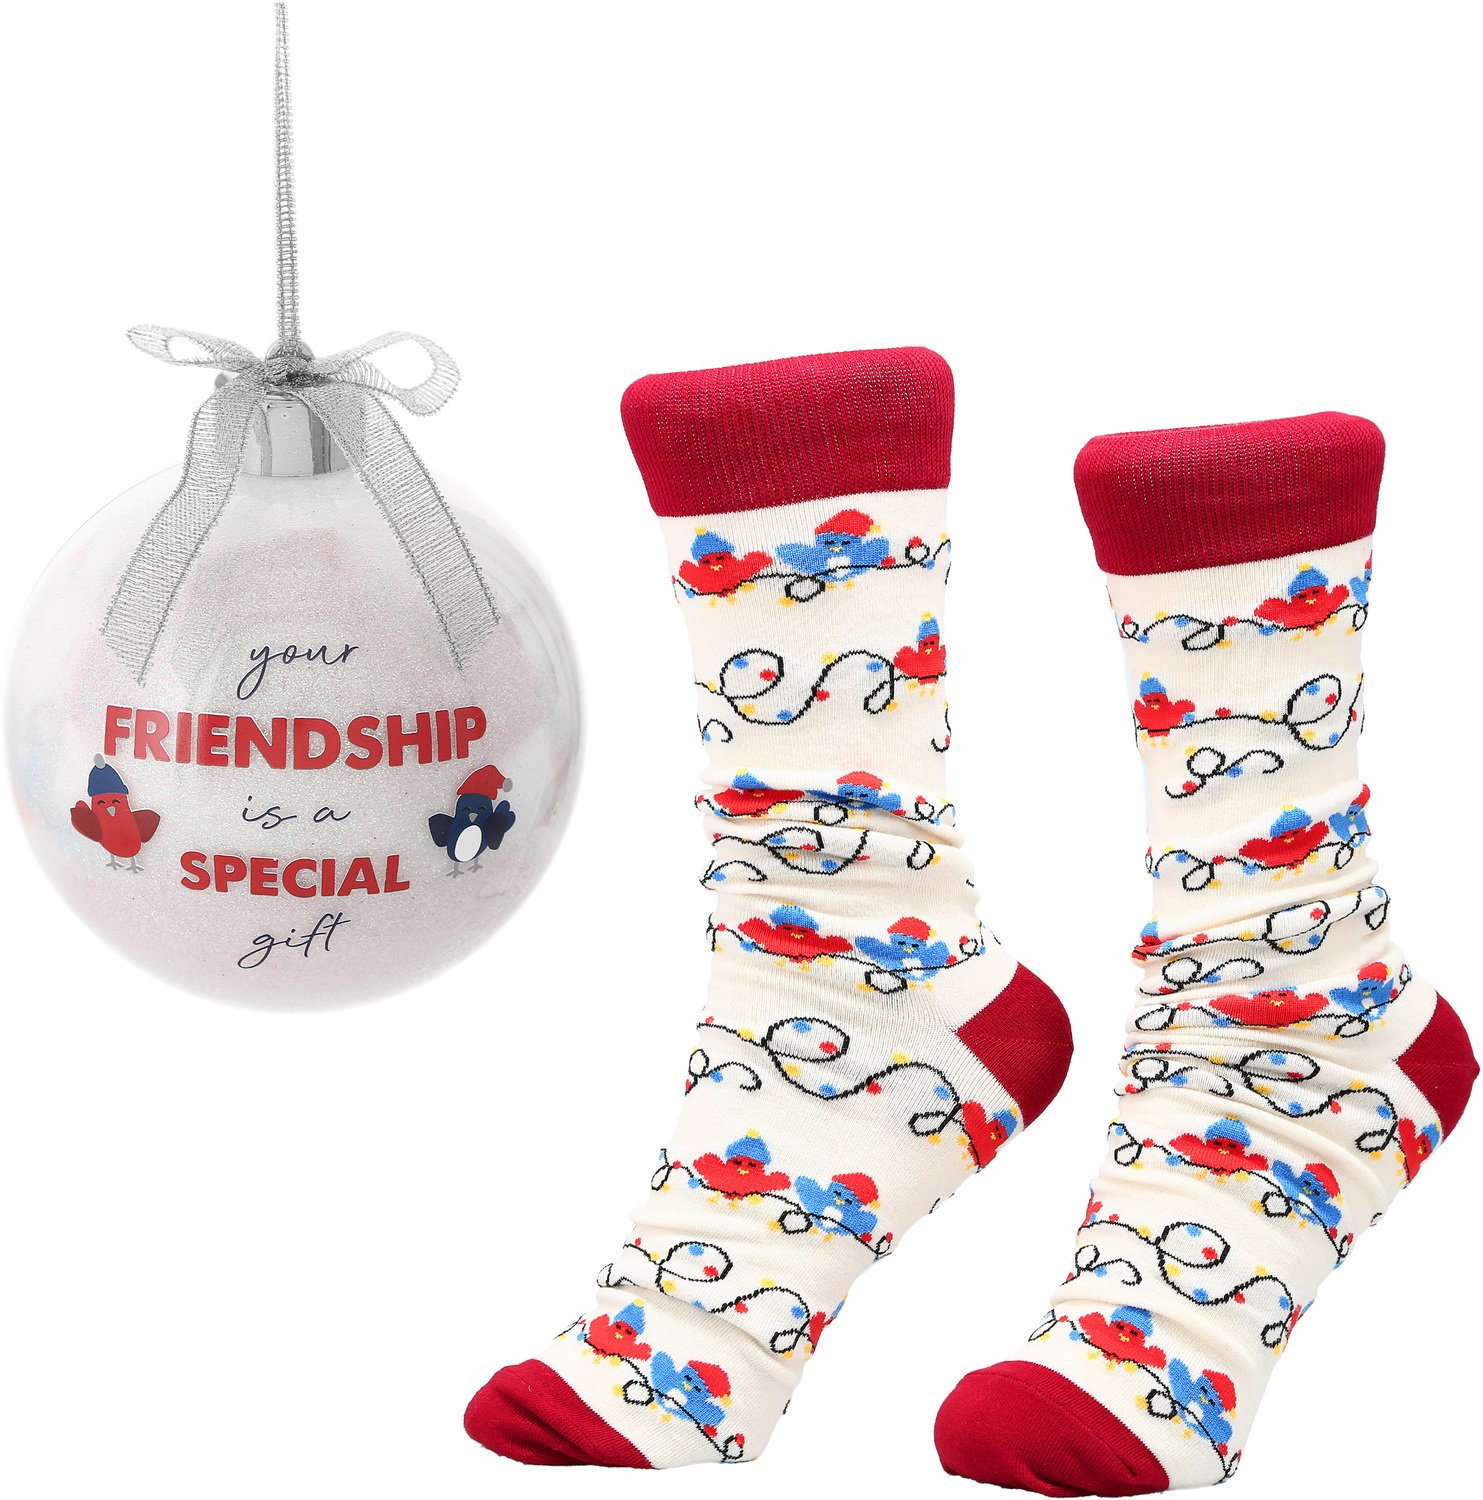 Friendship by Warm & Toe-sty - Friendship - 4" Ornament with Unisex Holiday Socks